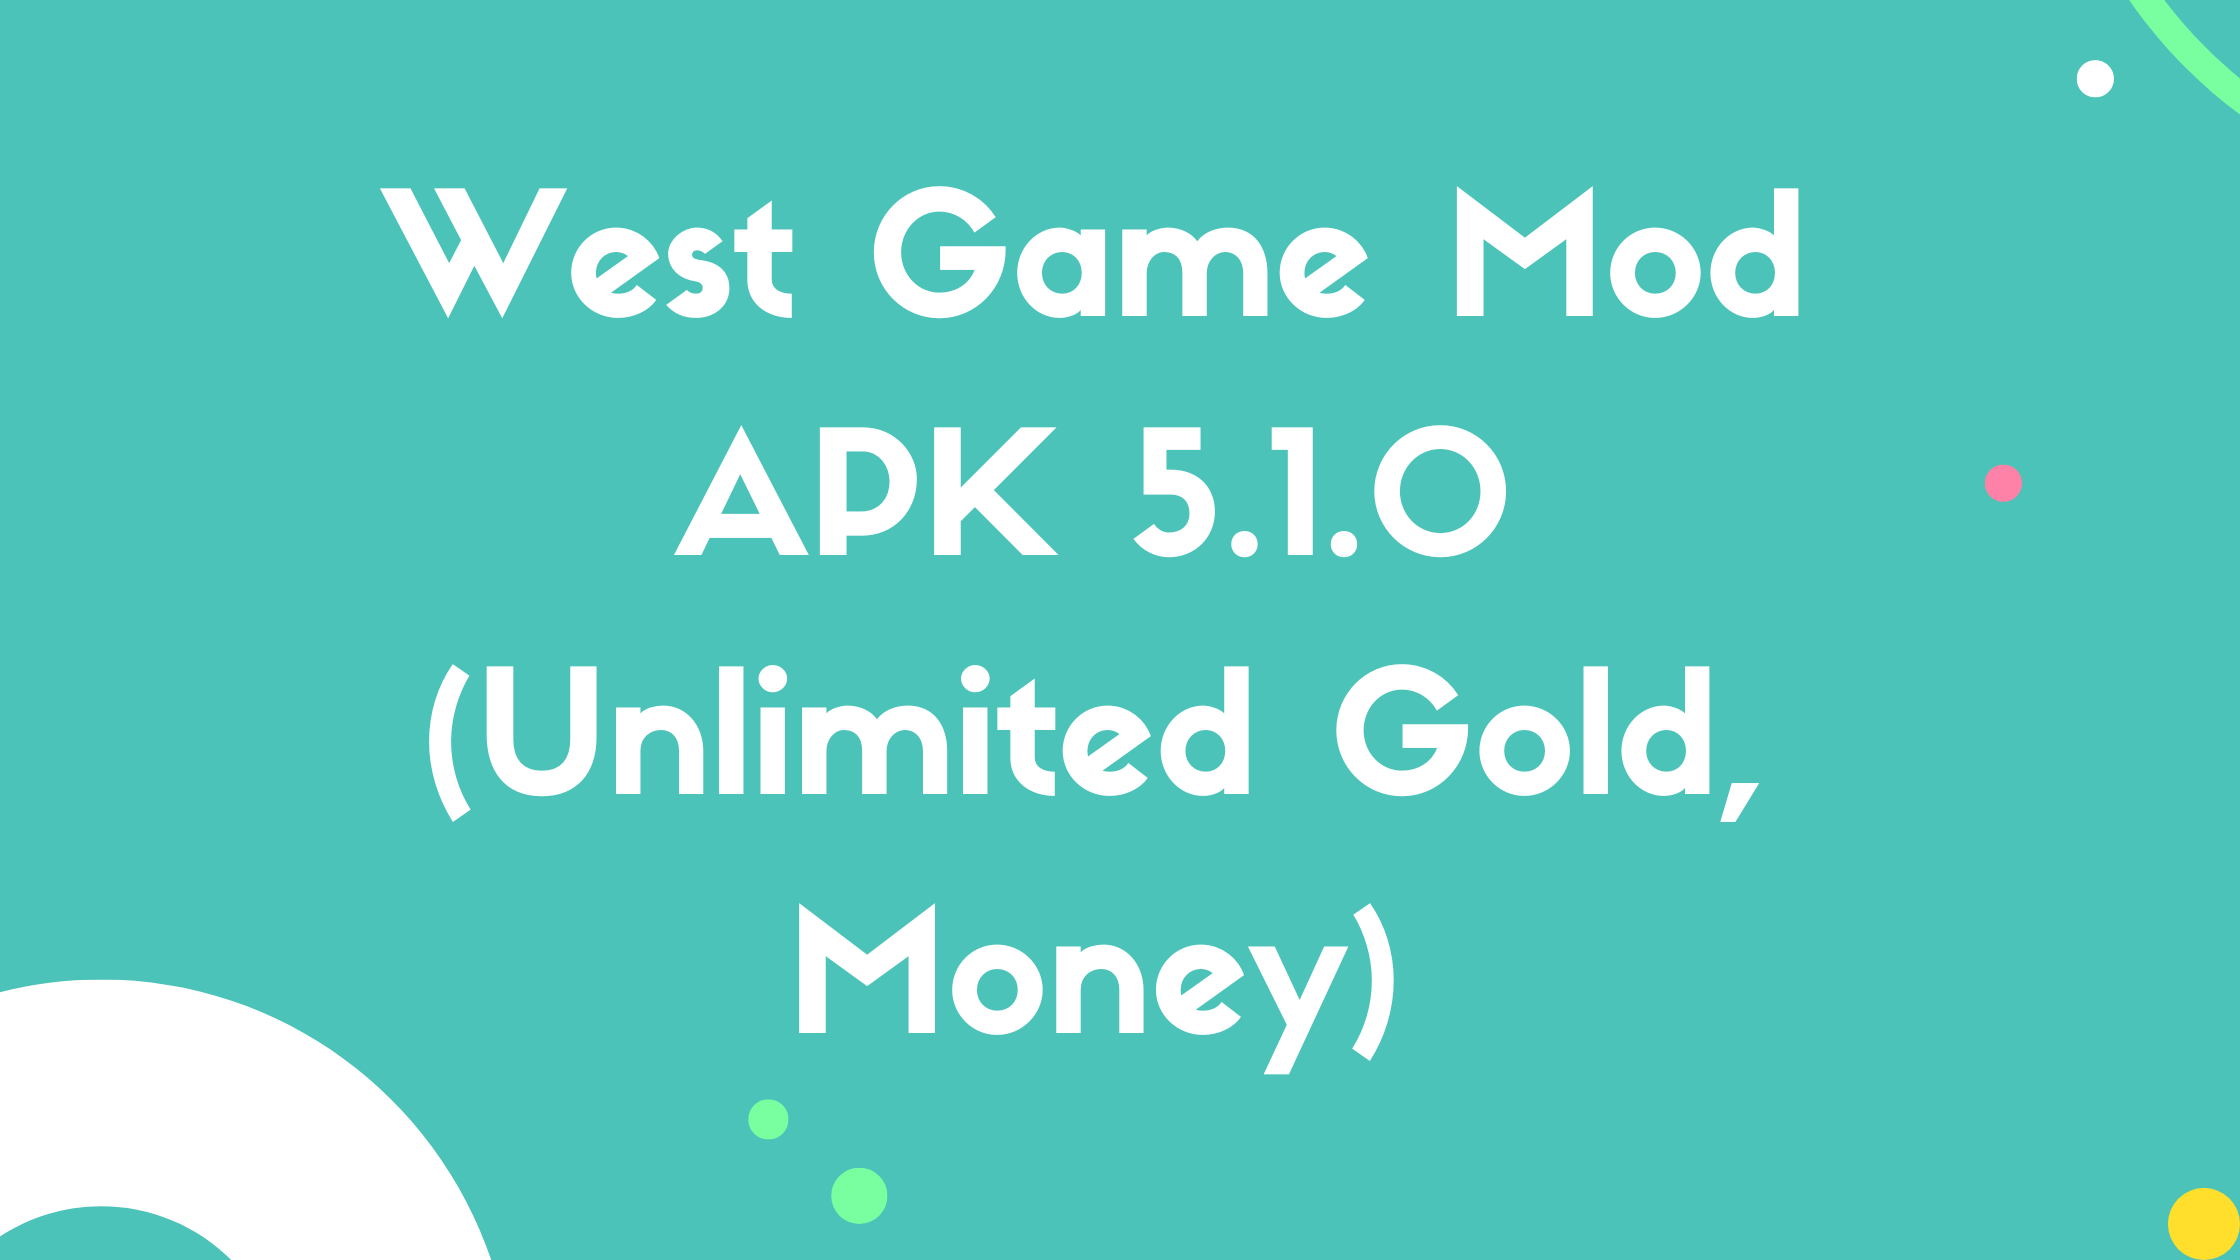 West Game Mod APK 5.1.0 (Unlimited Gold, Money)